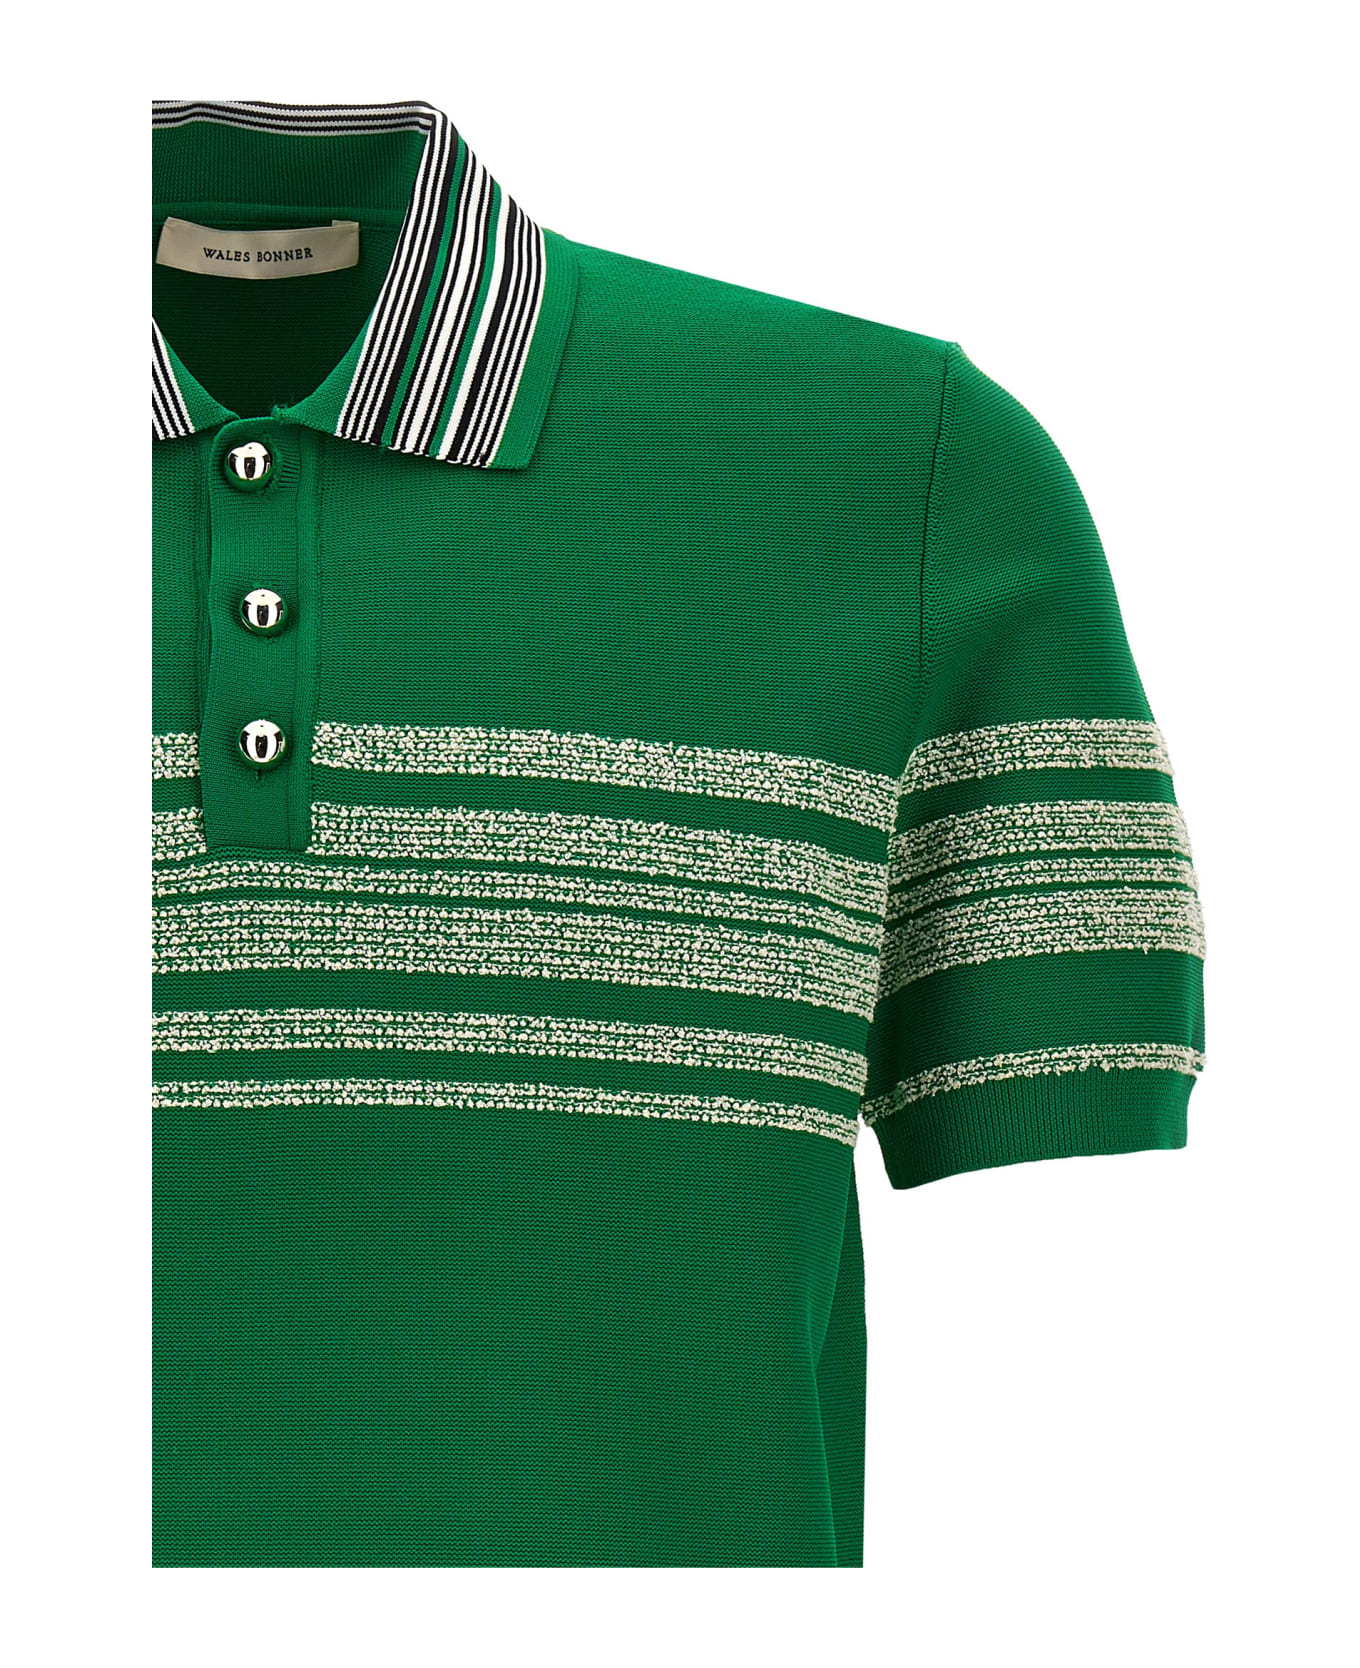 Wales Bonner 'dawn' Polo Shirt - Green ポロシャツ